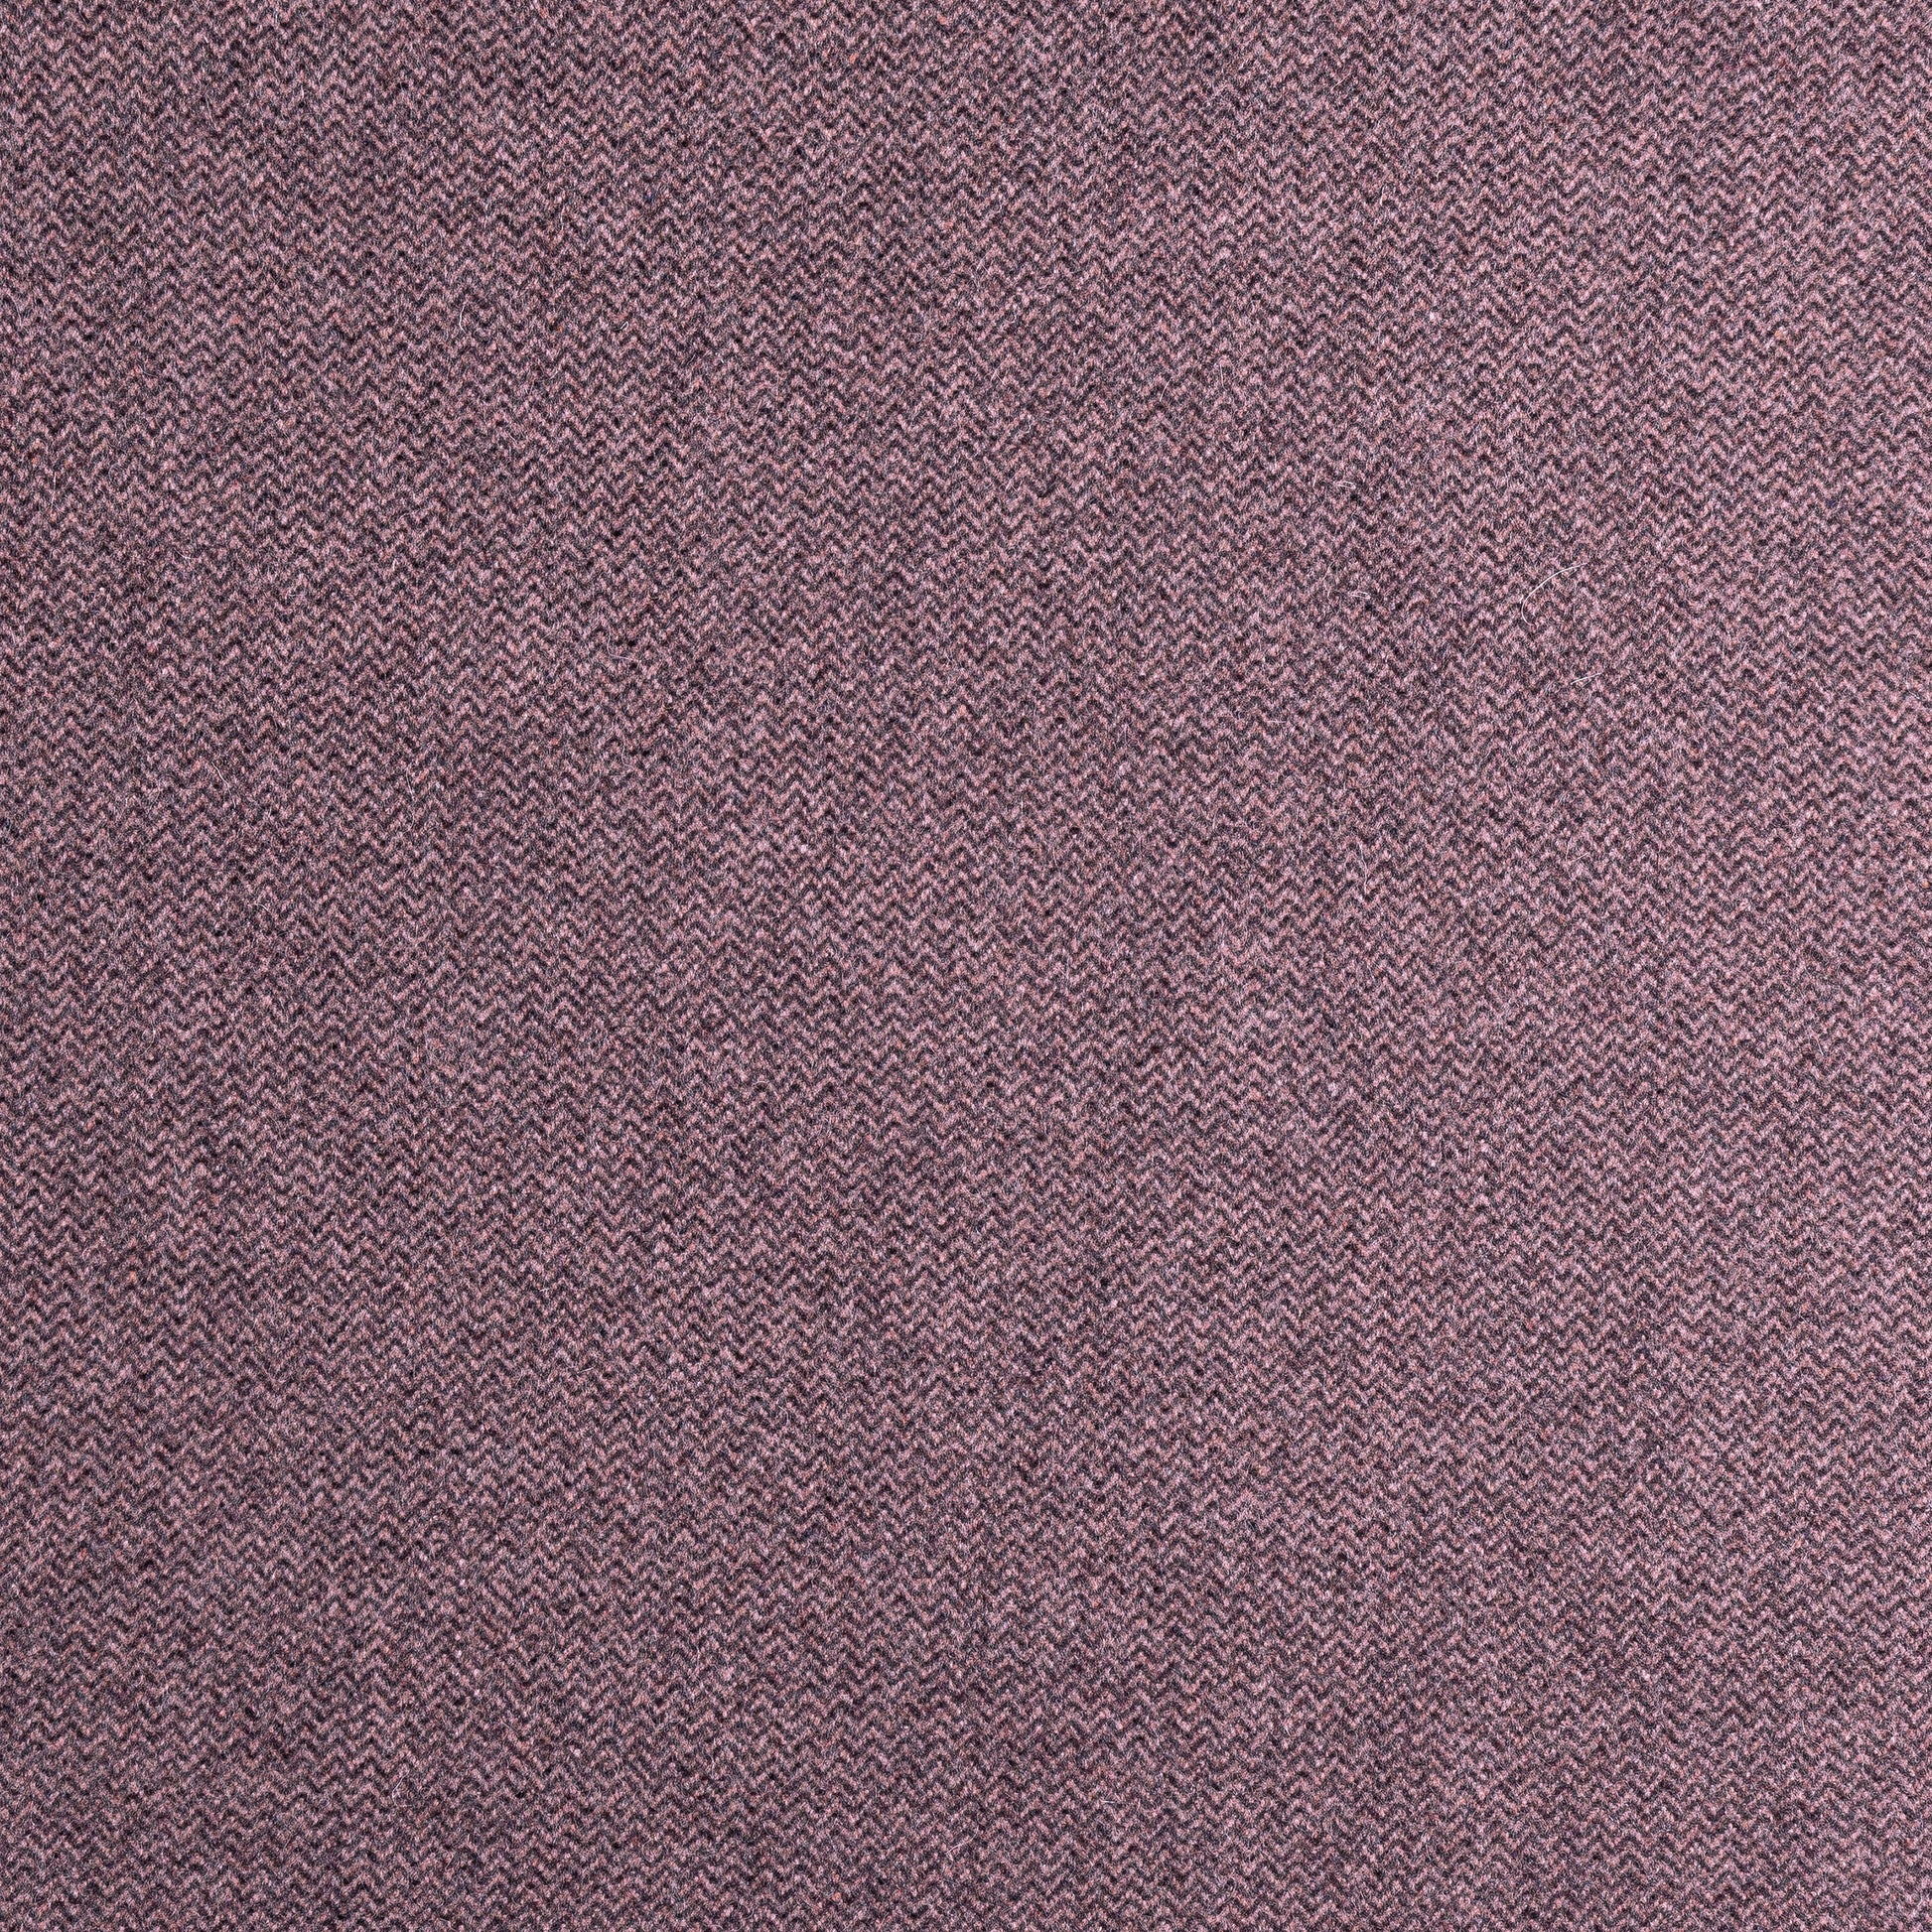 Purchase Thibaut Fabric Item W80902 pattern name Dorset color Aubergine